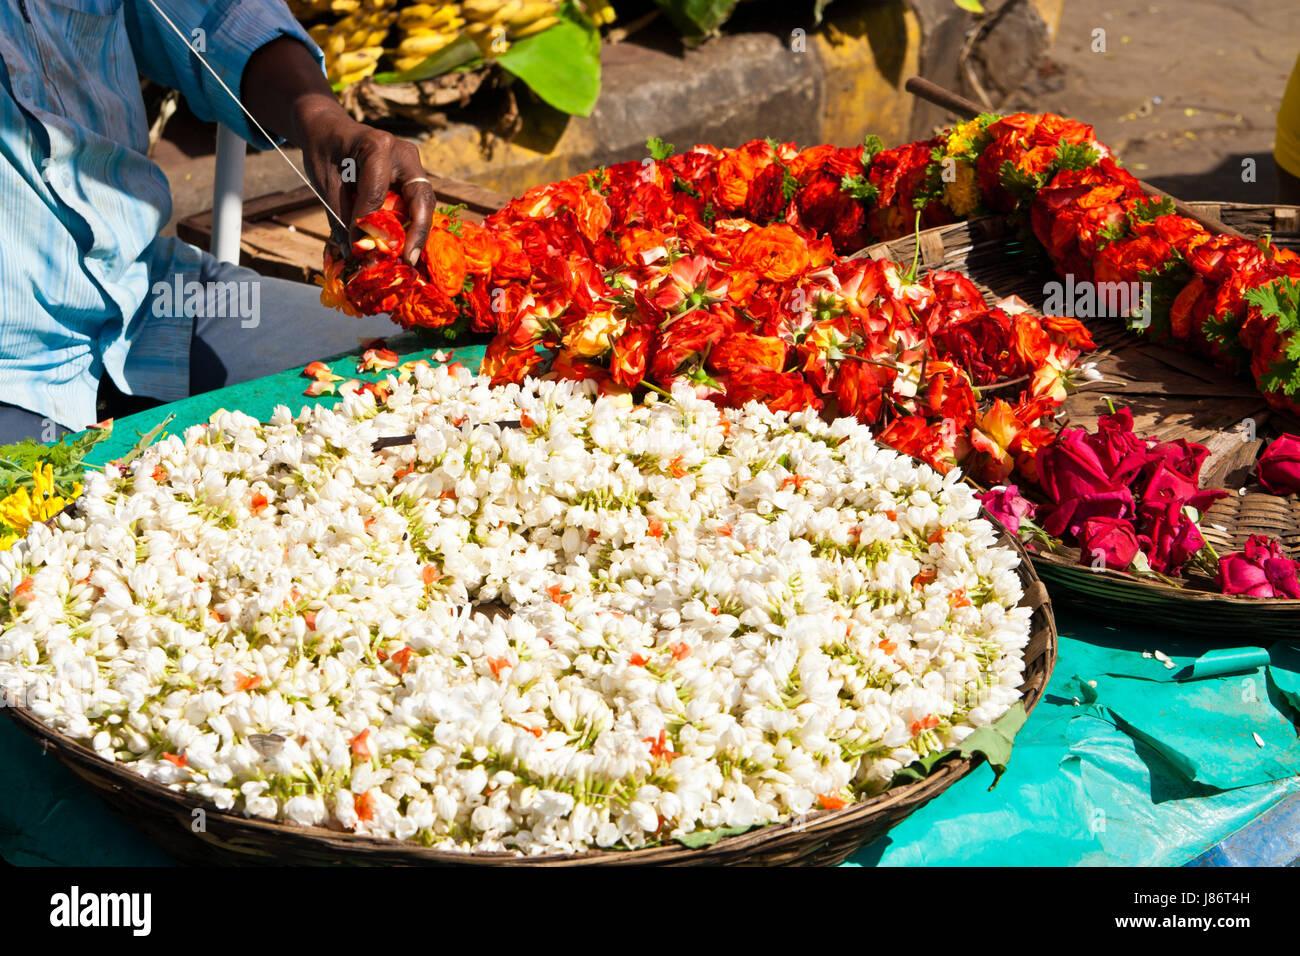 flower flowers plant india market stall garland weekly market marketplace flea Stock Photo